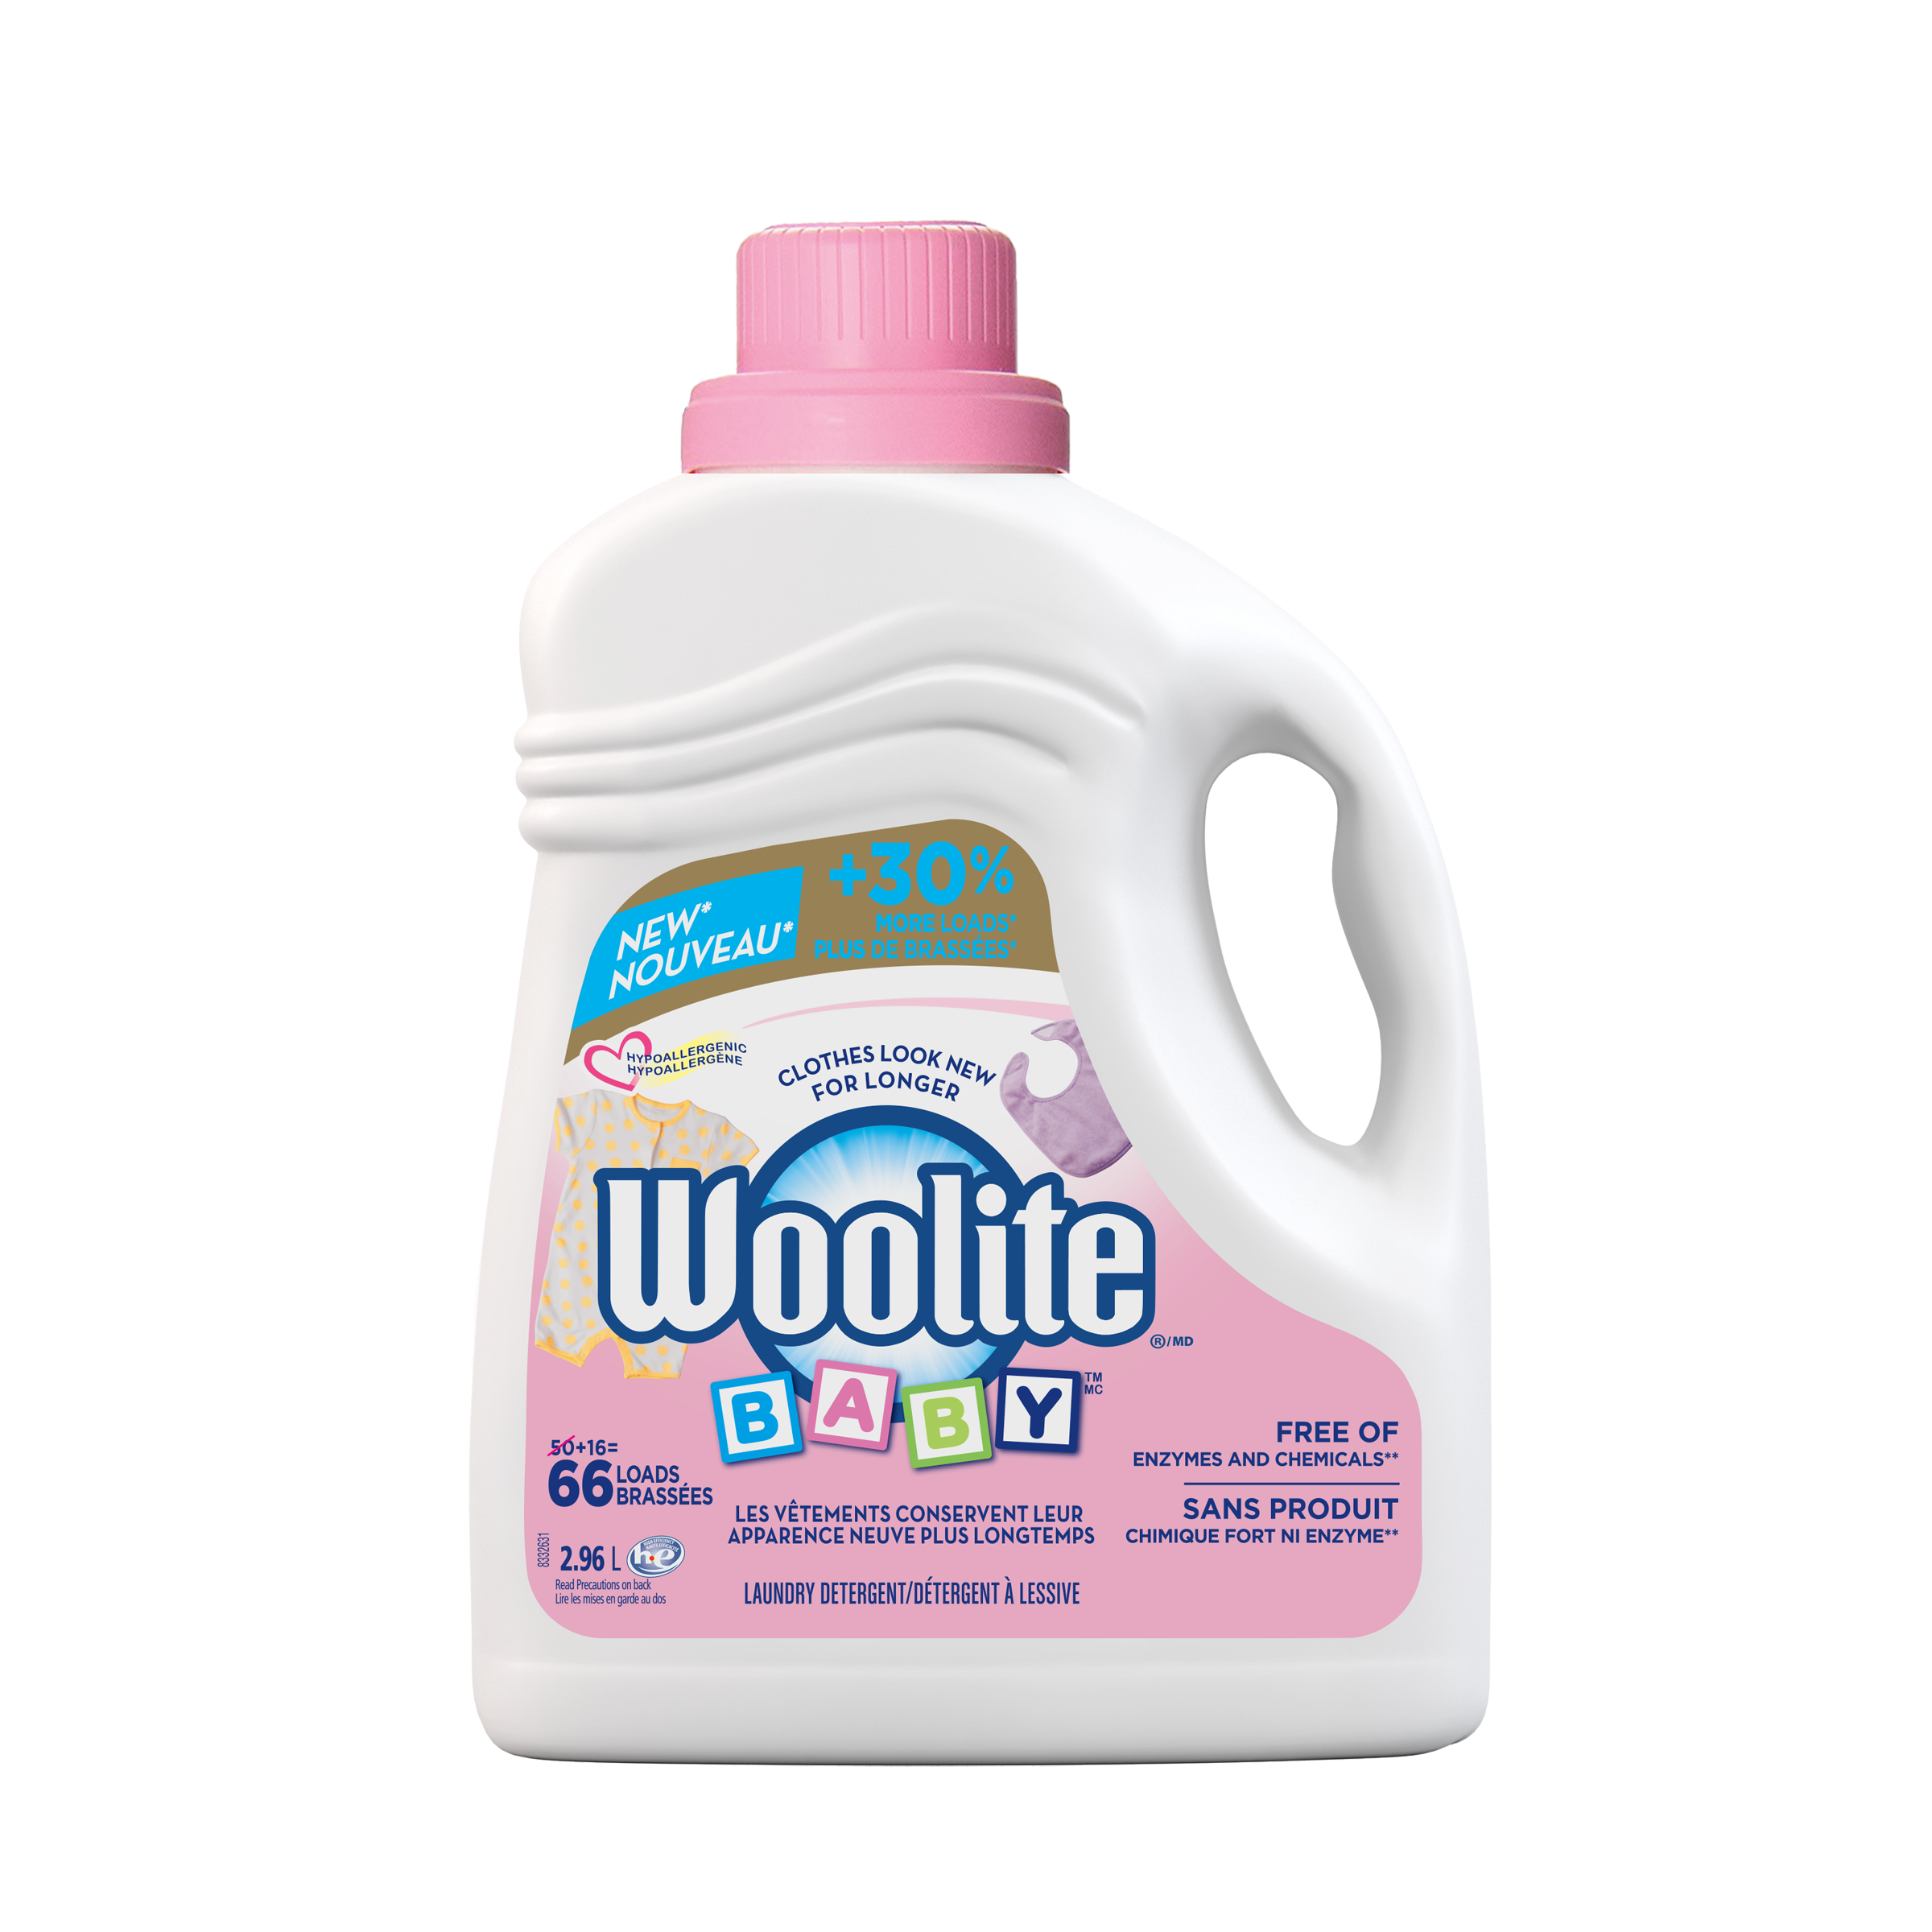 WOOLITE BABY Laundry Detergent Canada